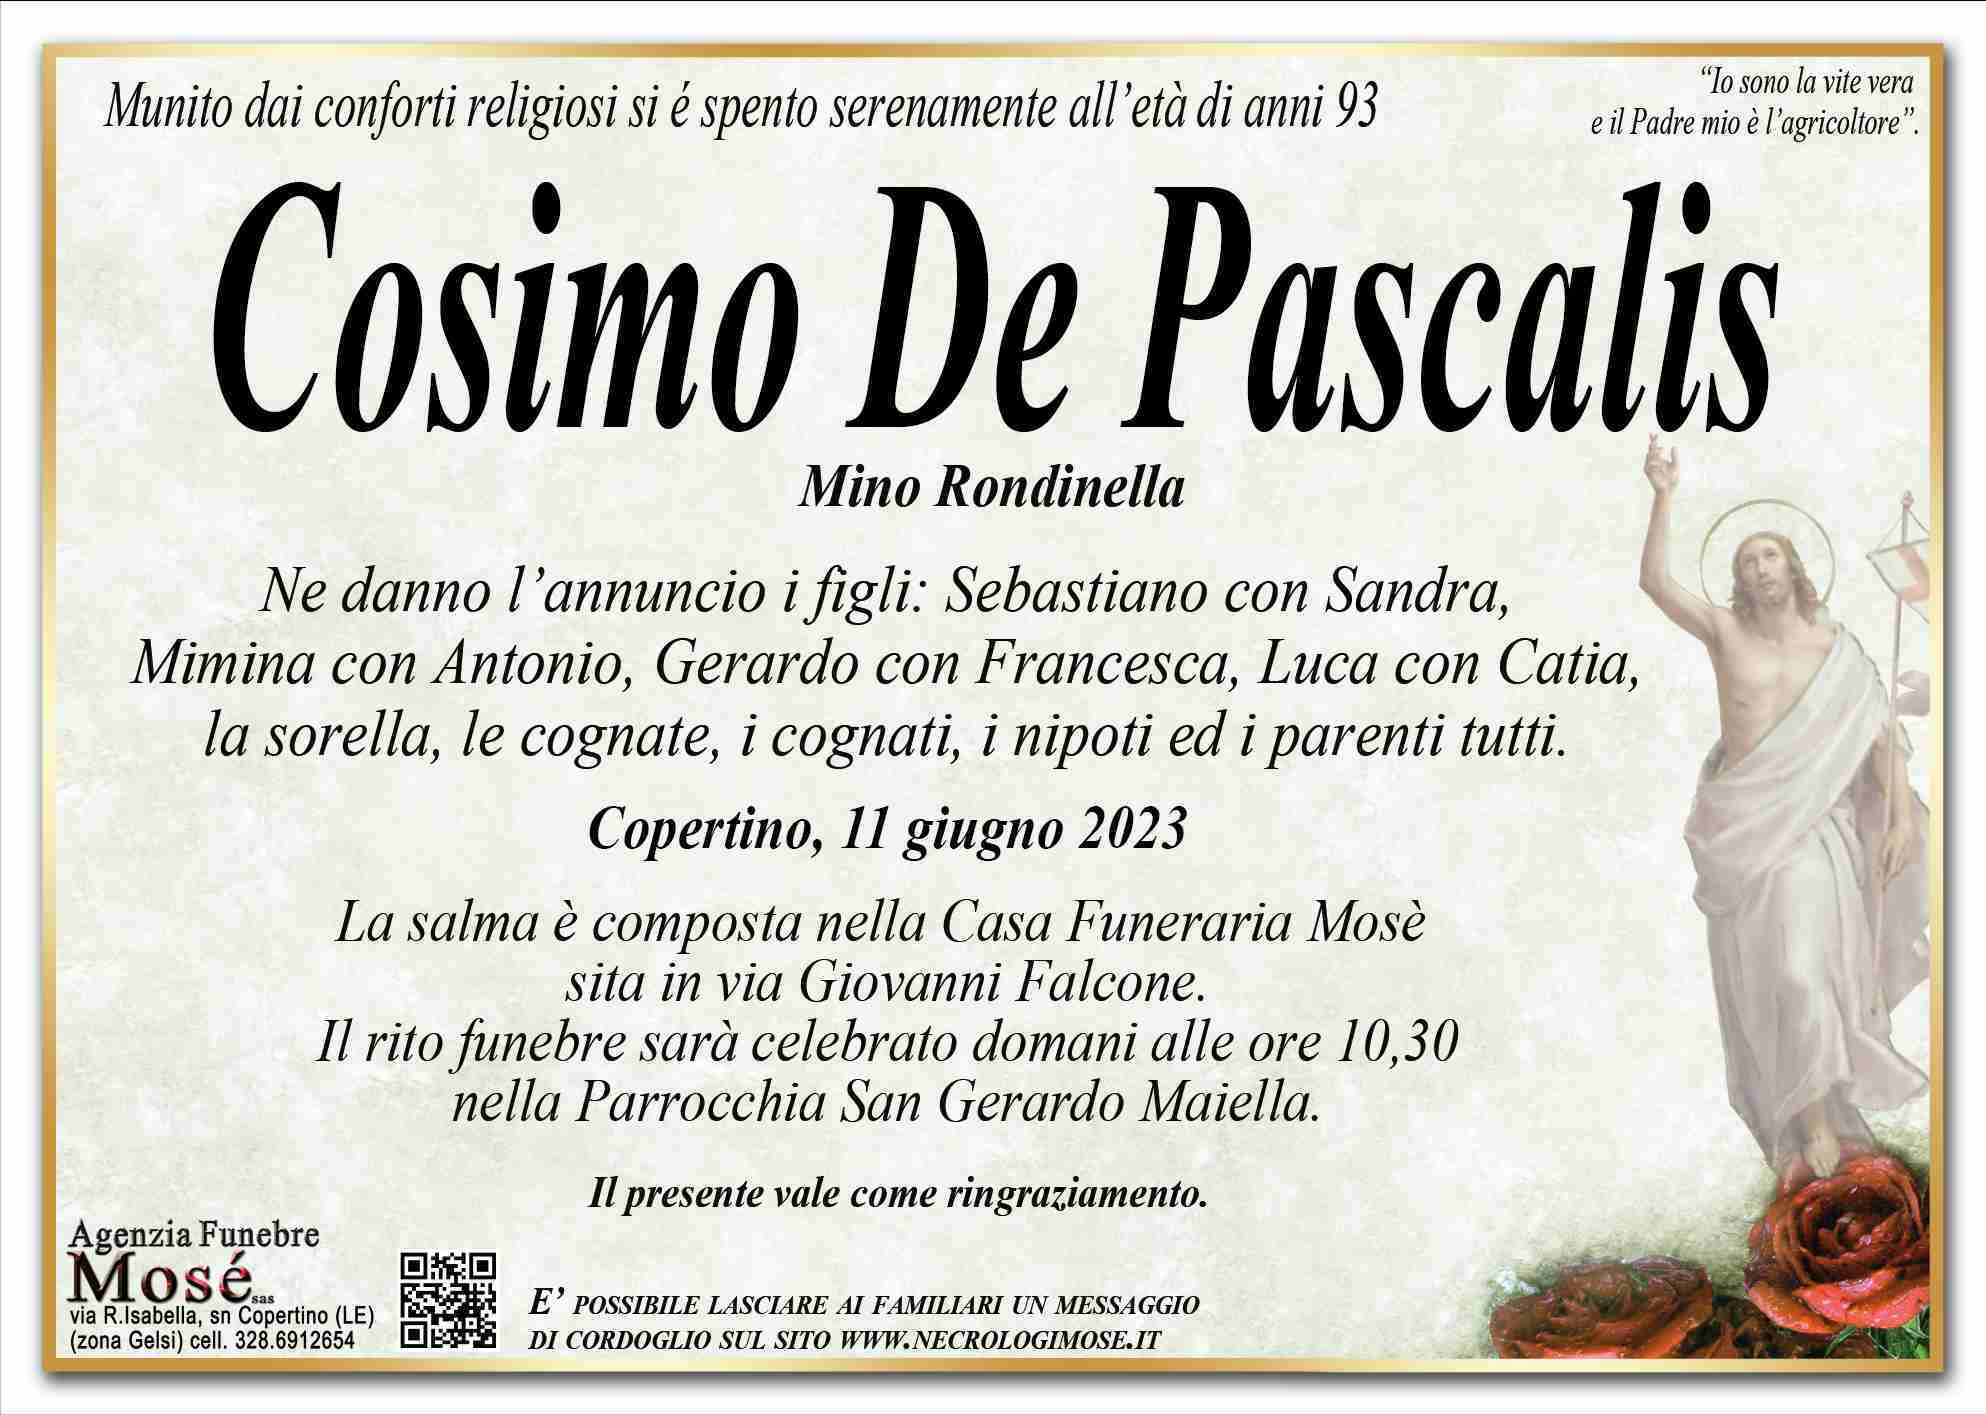 Cosimo De Pascalis